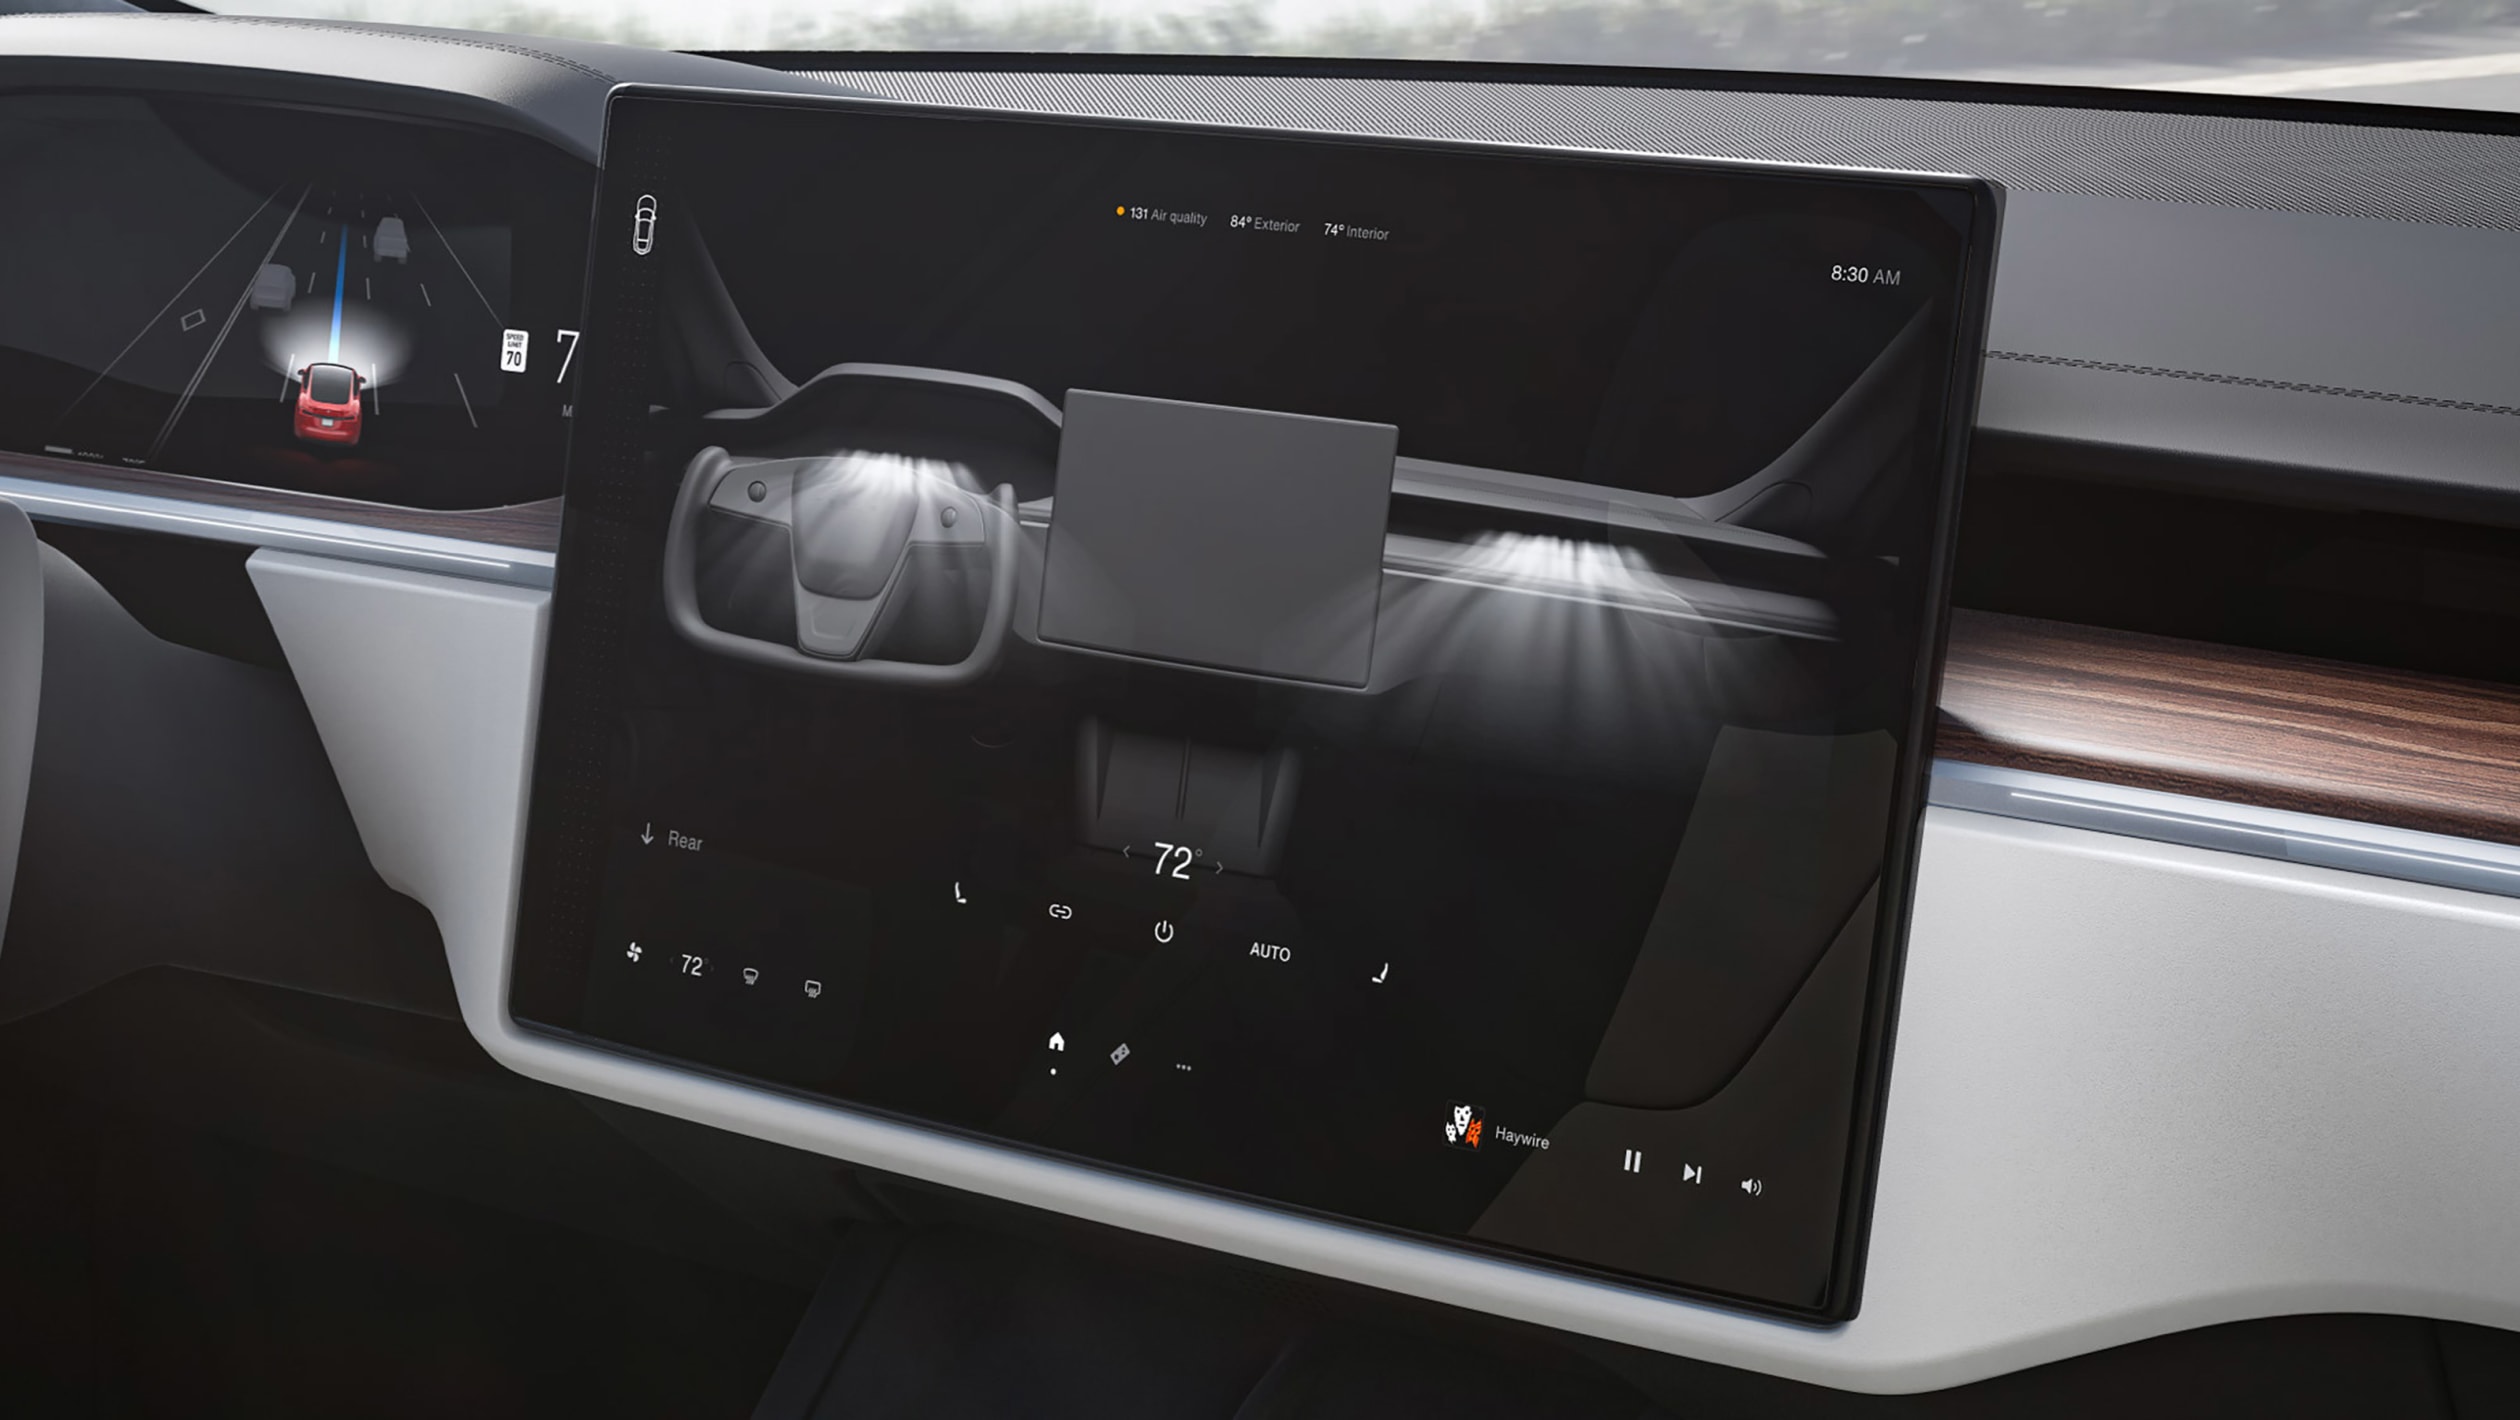 Tesla Model S interior display